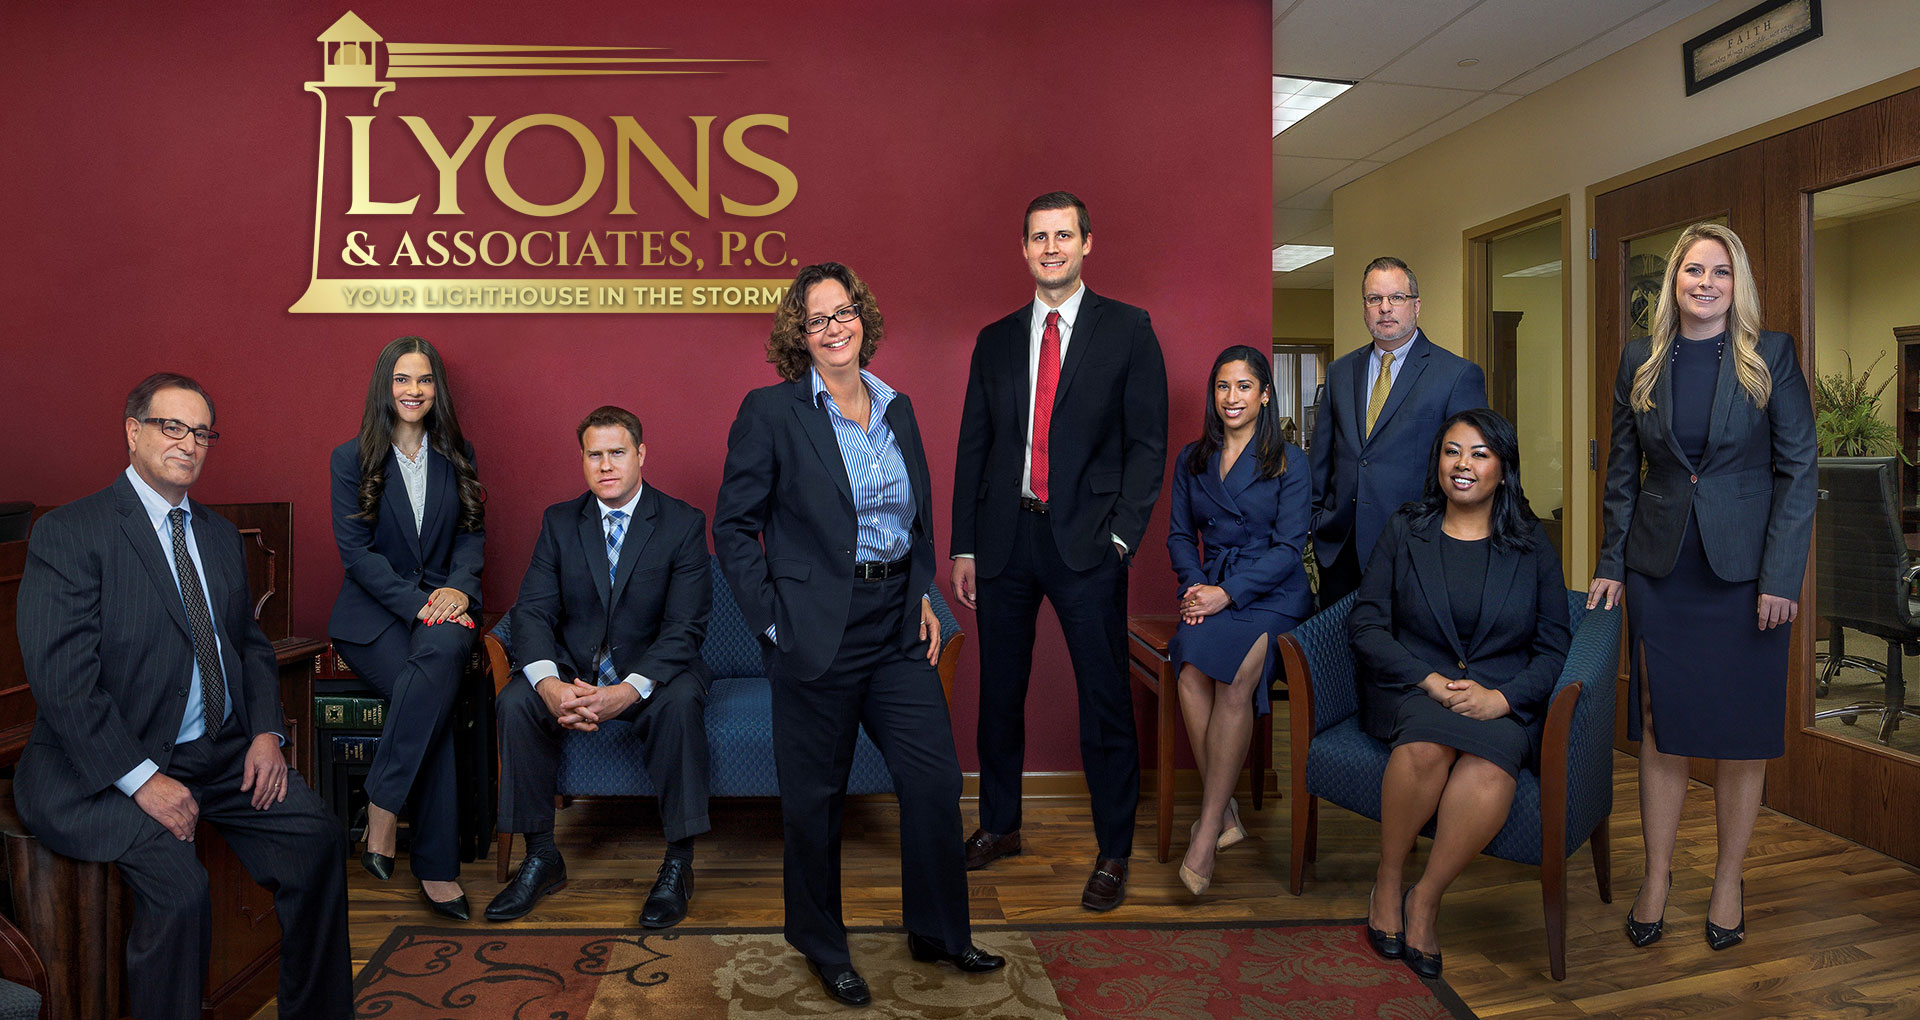 Lyons Association Group Photo